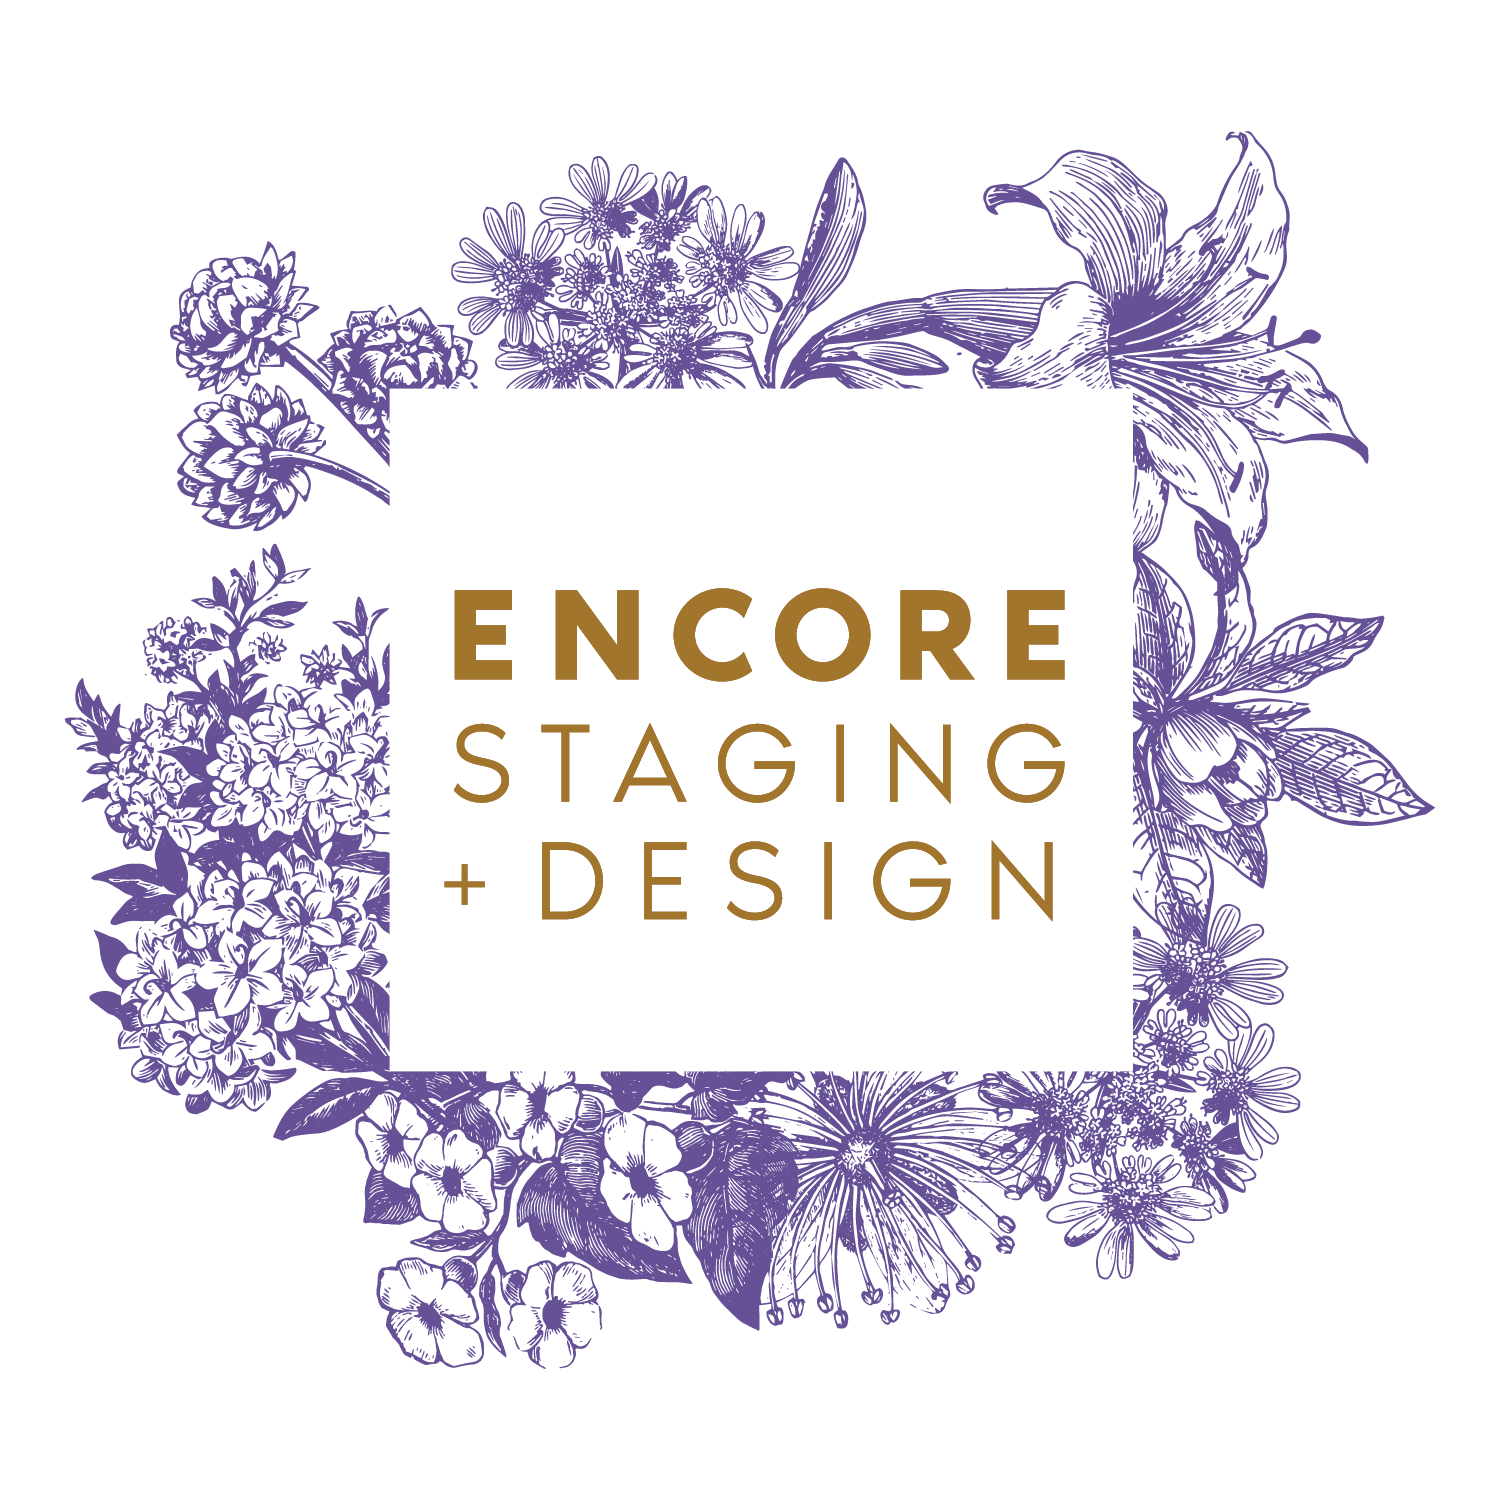 ENCORE STAGING + DESIGN